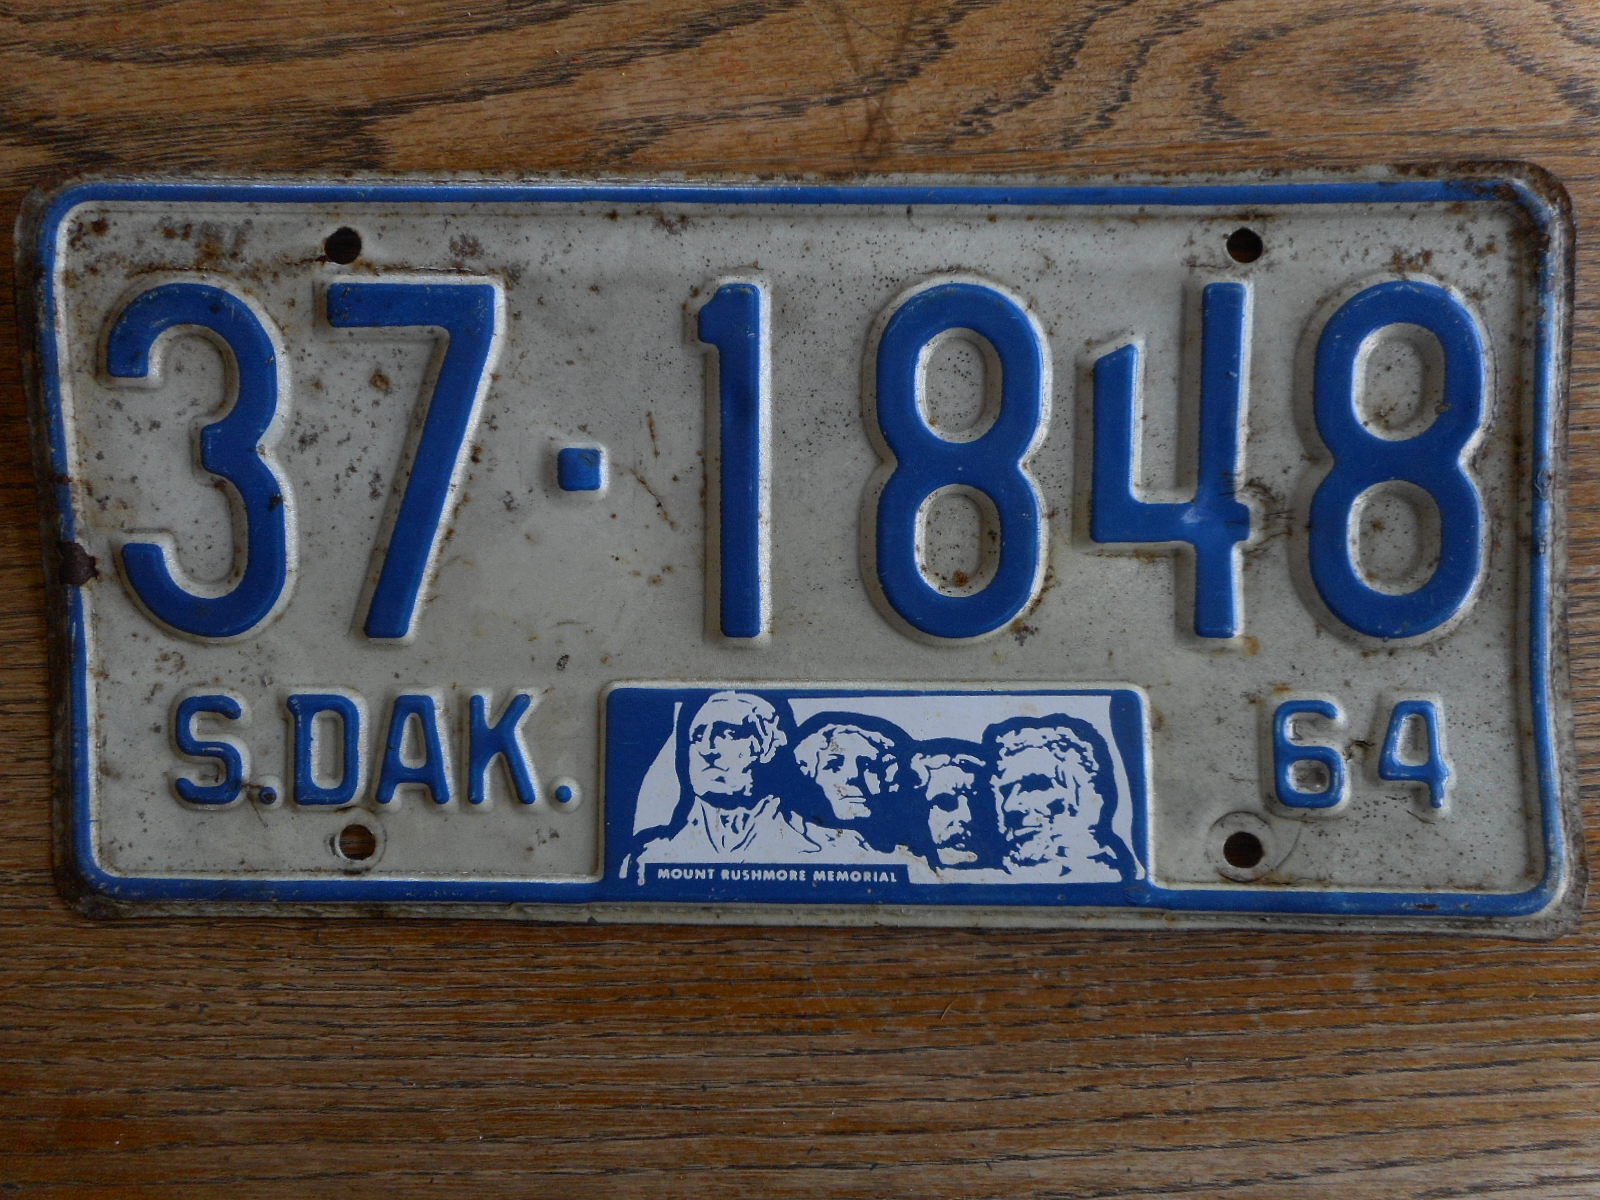 S.Dak South Dakota SD 1964 License Plate Vintage Rushmore State 37-1848 